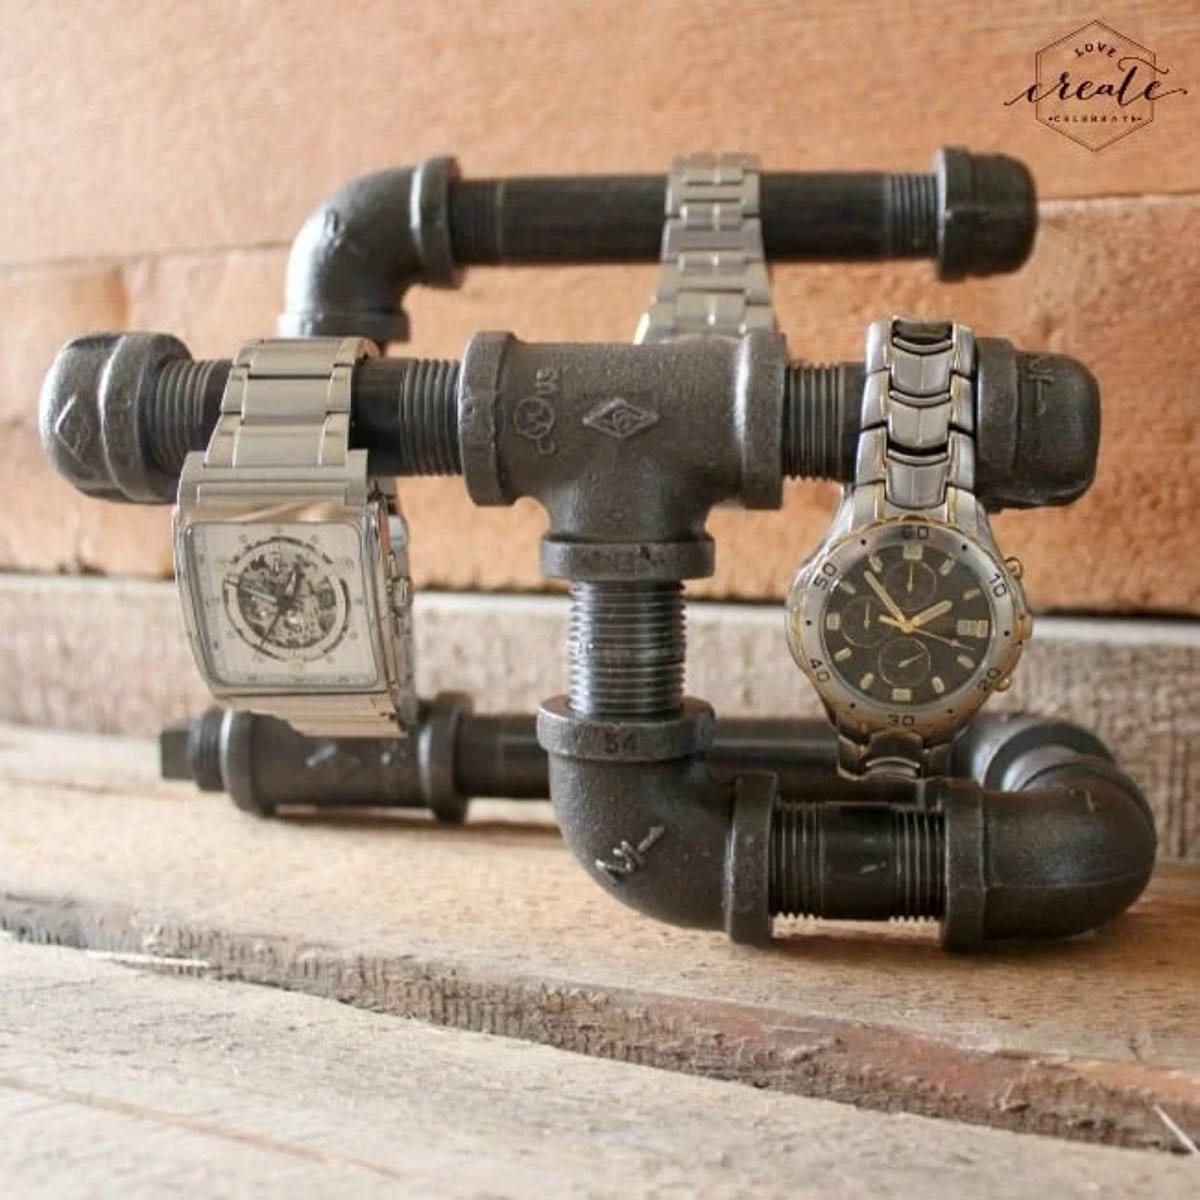 Industrial watch holder holding three men's watches